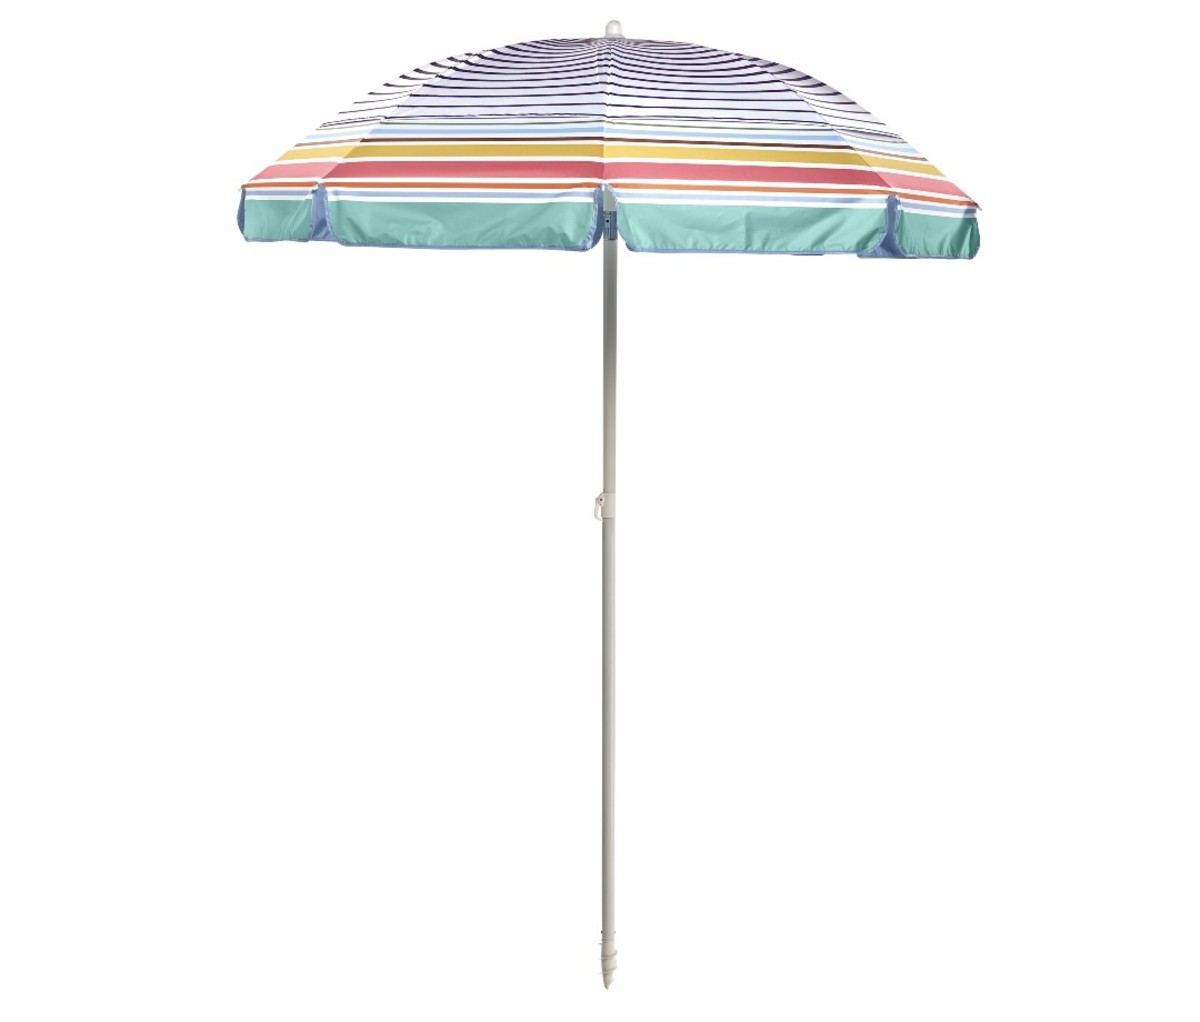 Coolibar UPF 50+ 6 Foot Intego Beach Umbrella